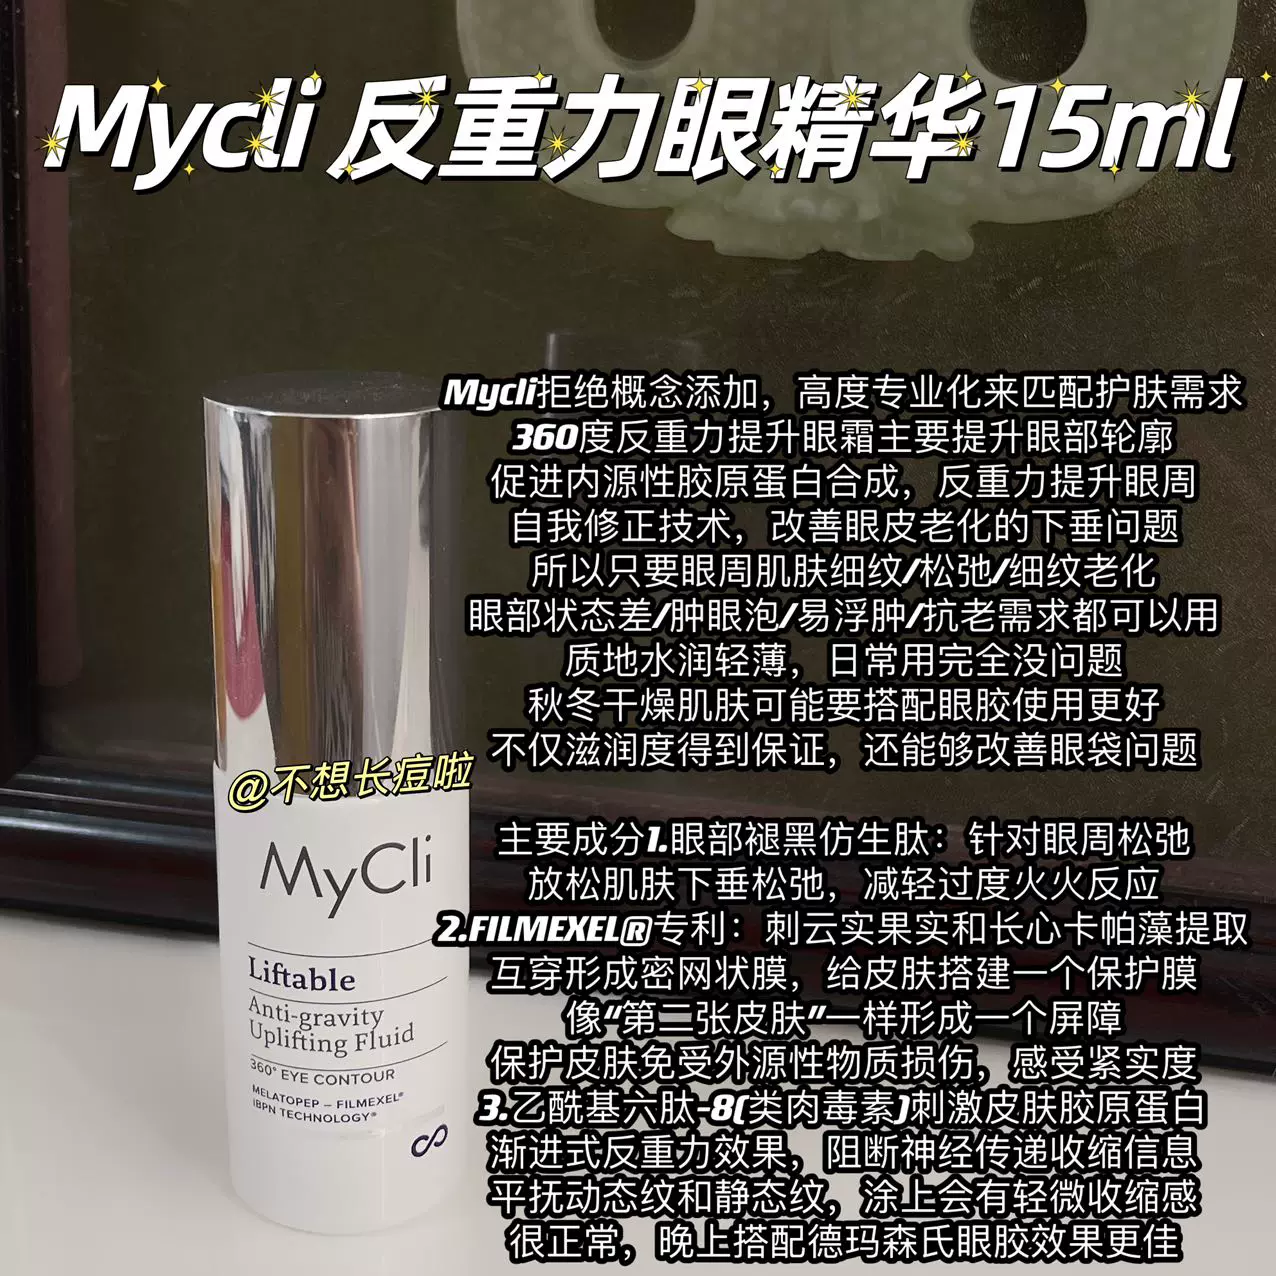 LIFTABLE: Anti-gravity Uplifting Eye Fluid - MyCli